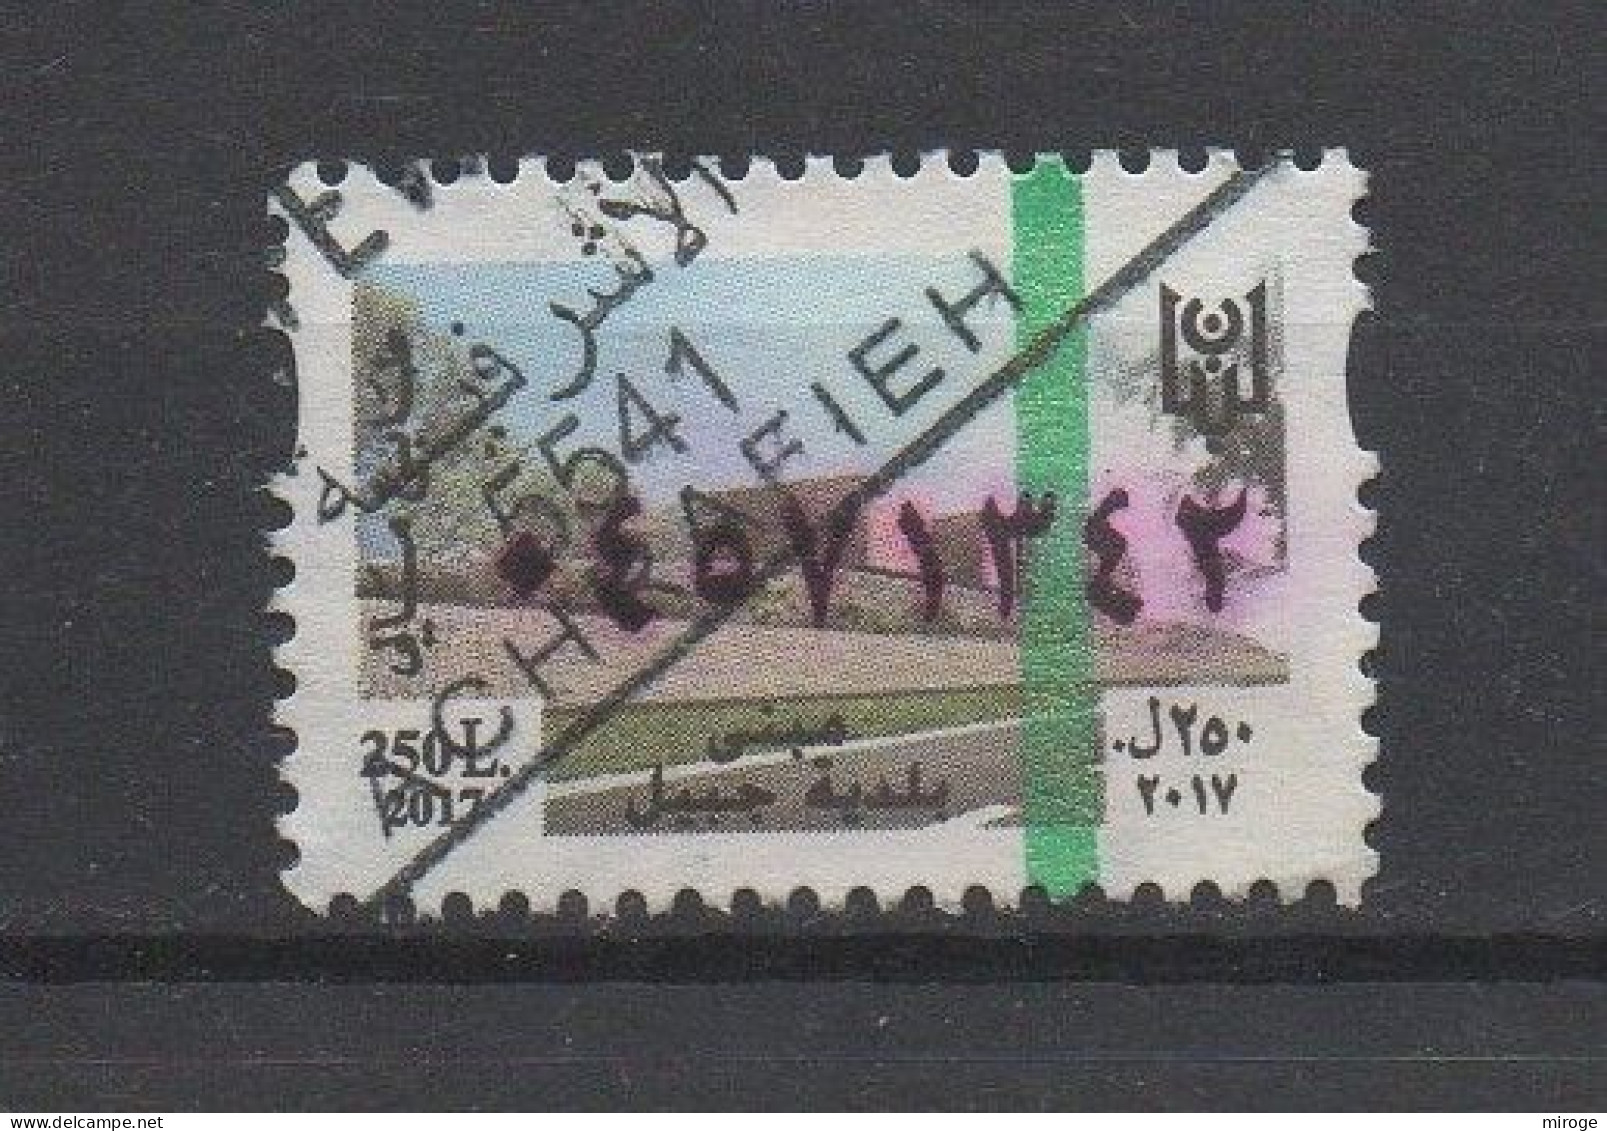 Lebanon Jbeil Fiscal 2017 250L Used Revenue Stamp, Timbre Liban - Libanon